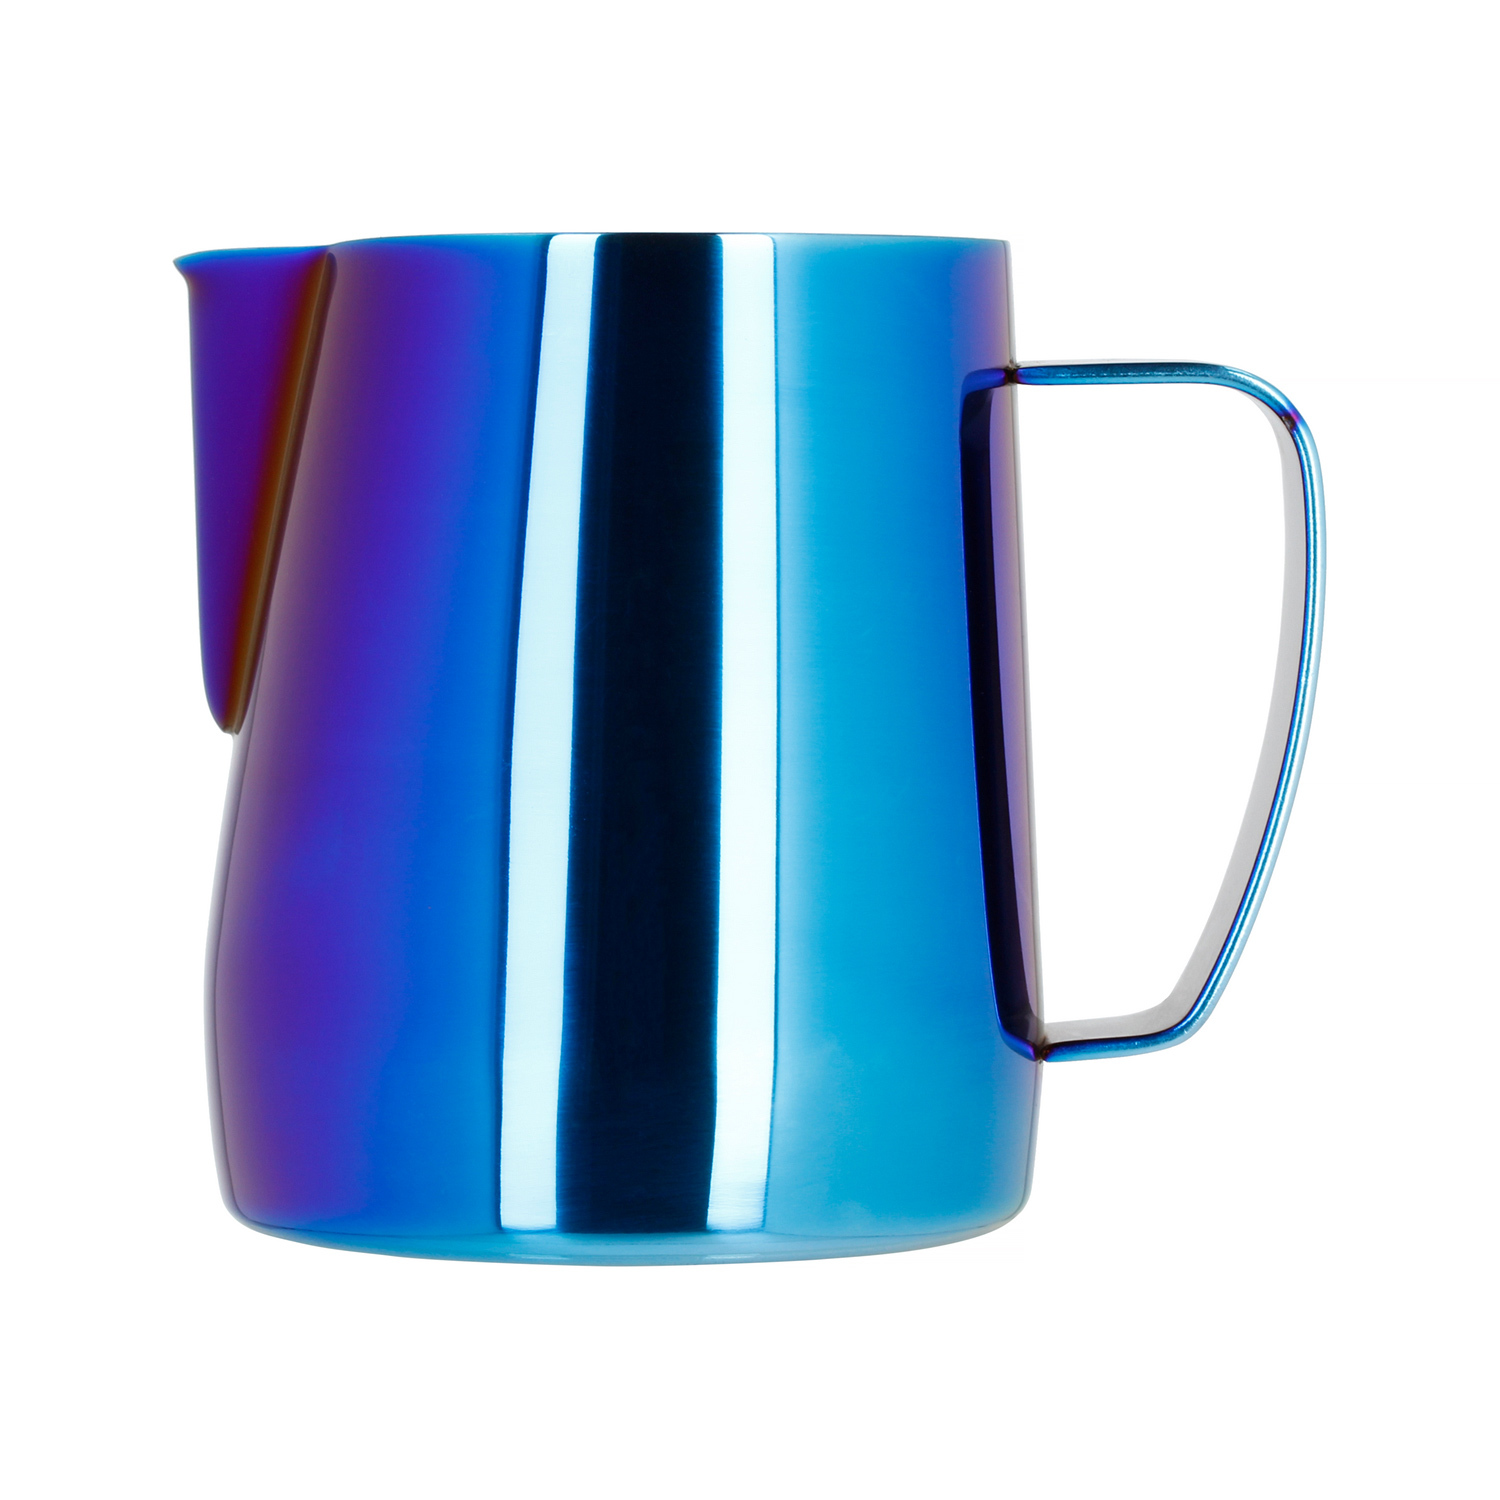 https://www.cremashop.eu/content/galleries/barista-space/milk-pitcher-blue/barista-space-milk-pitcher-blue-3070.jpeg